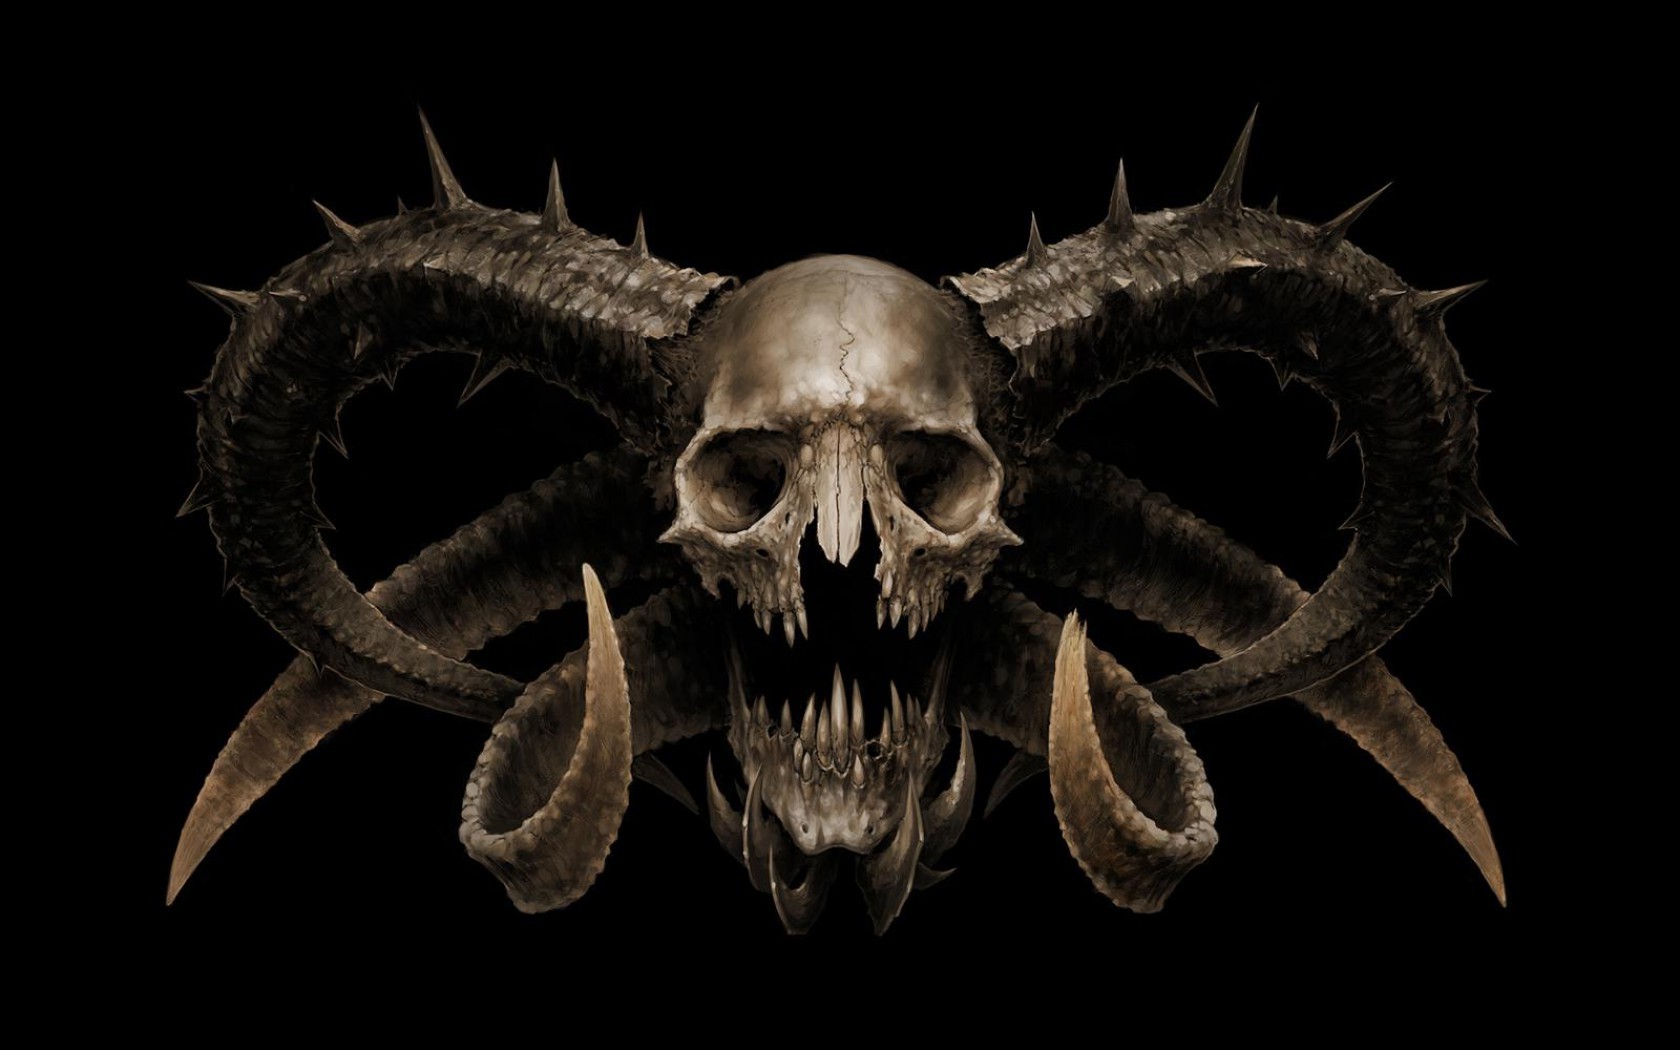 General 1680x1050 digital art creature skull horns demon fangs teeth devil black background death spooky horror